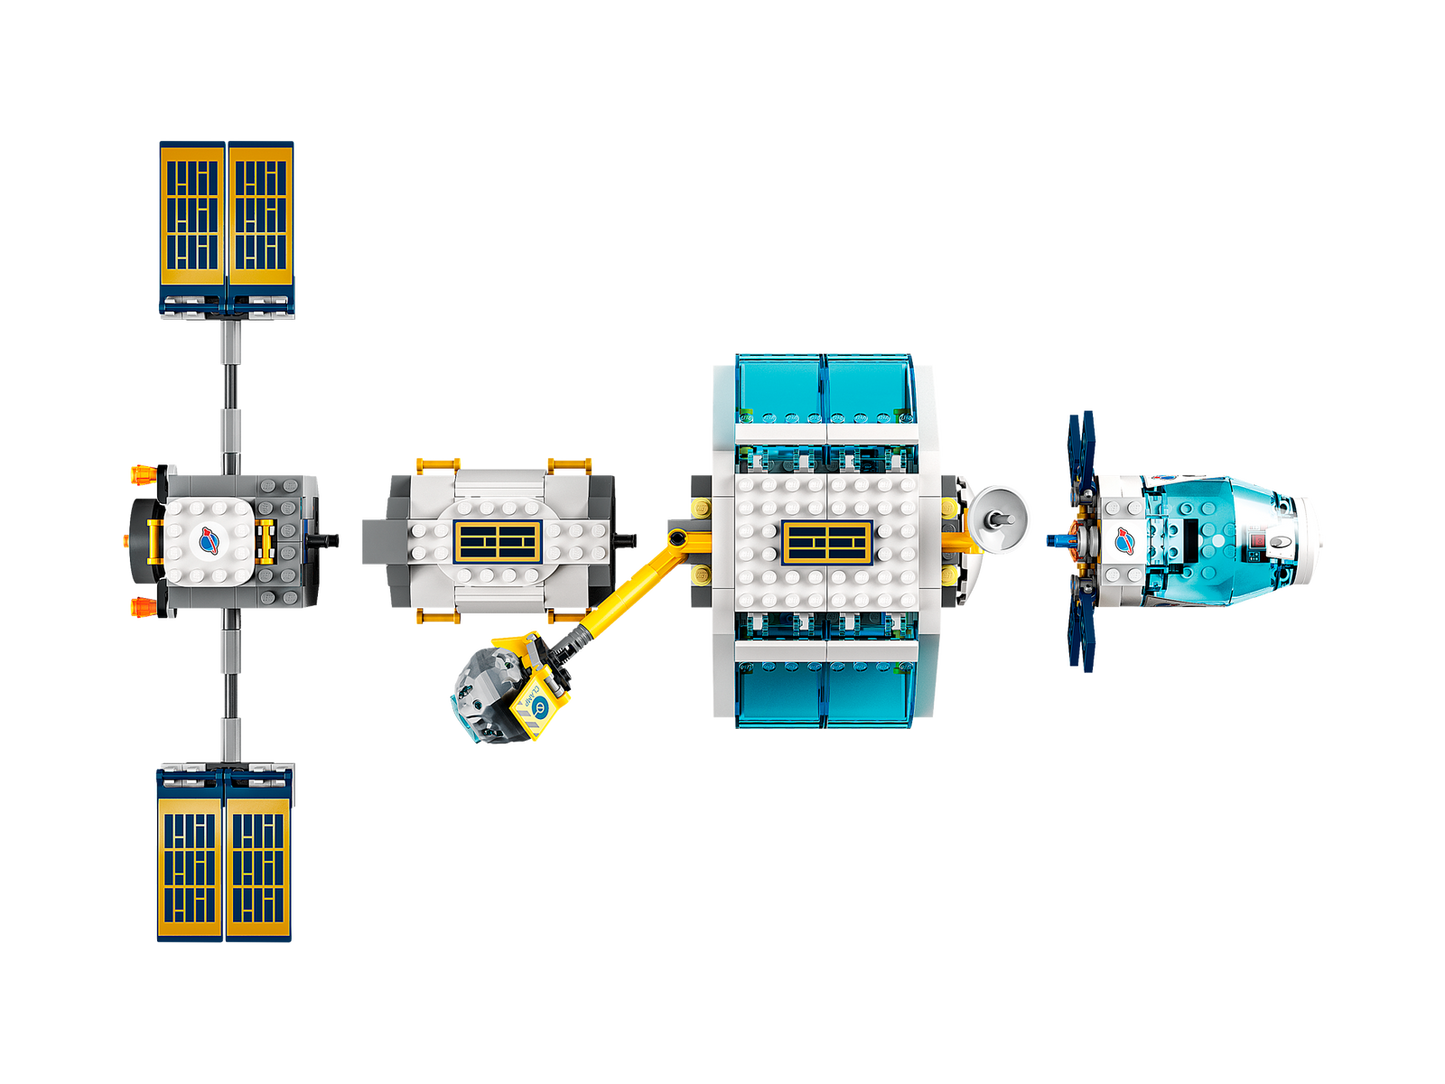 LEGO City Lunar Space Station 60349